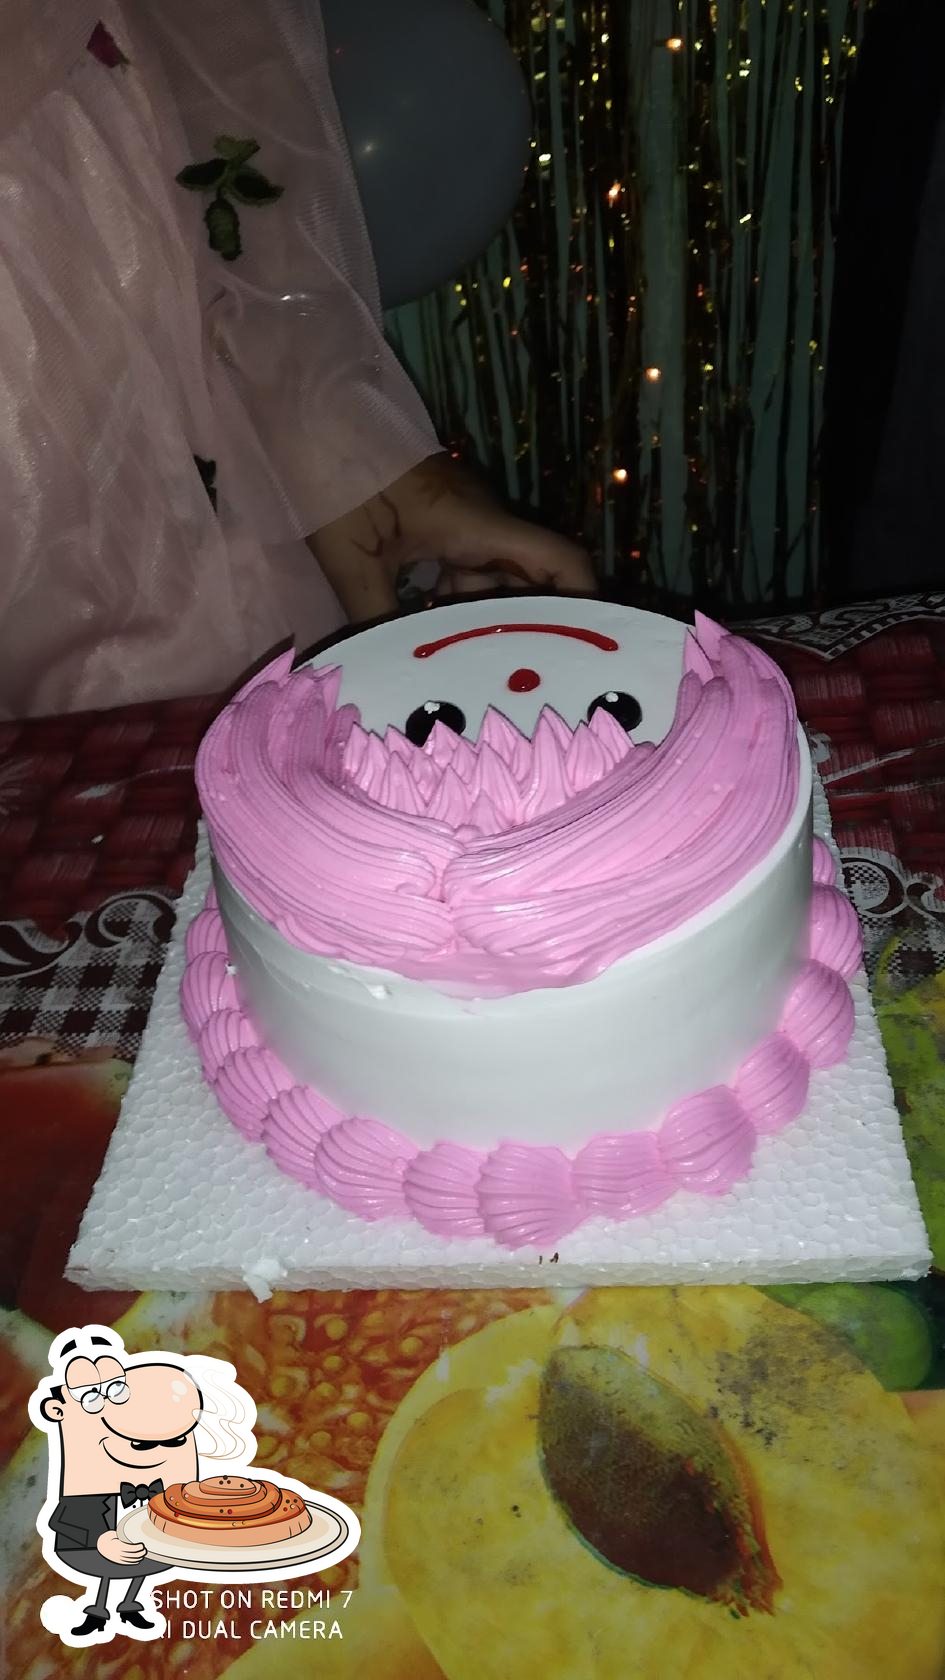 Muskan birthday cake home shop, Kurhani - Restaurant reviews